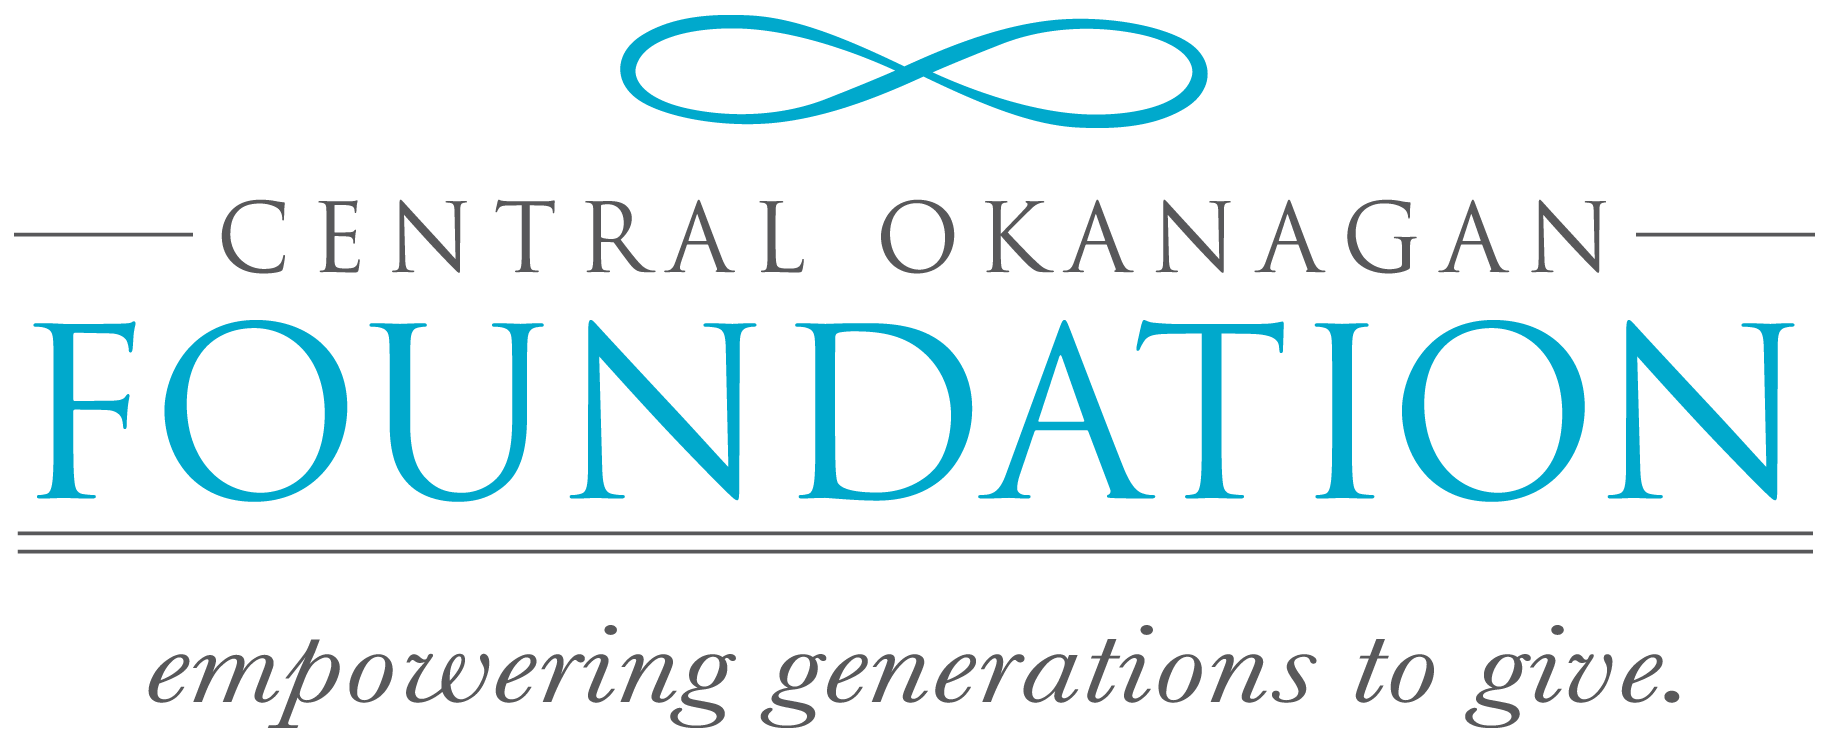 Central Okanagan Foundation logo